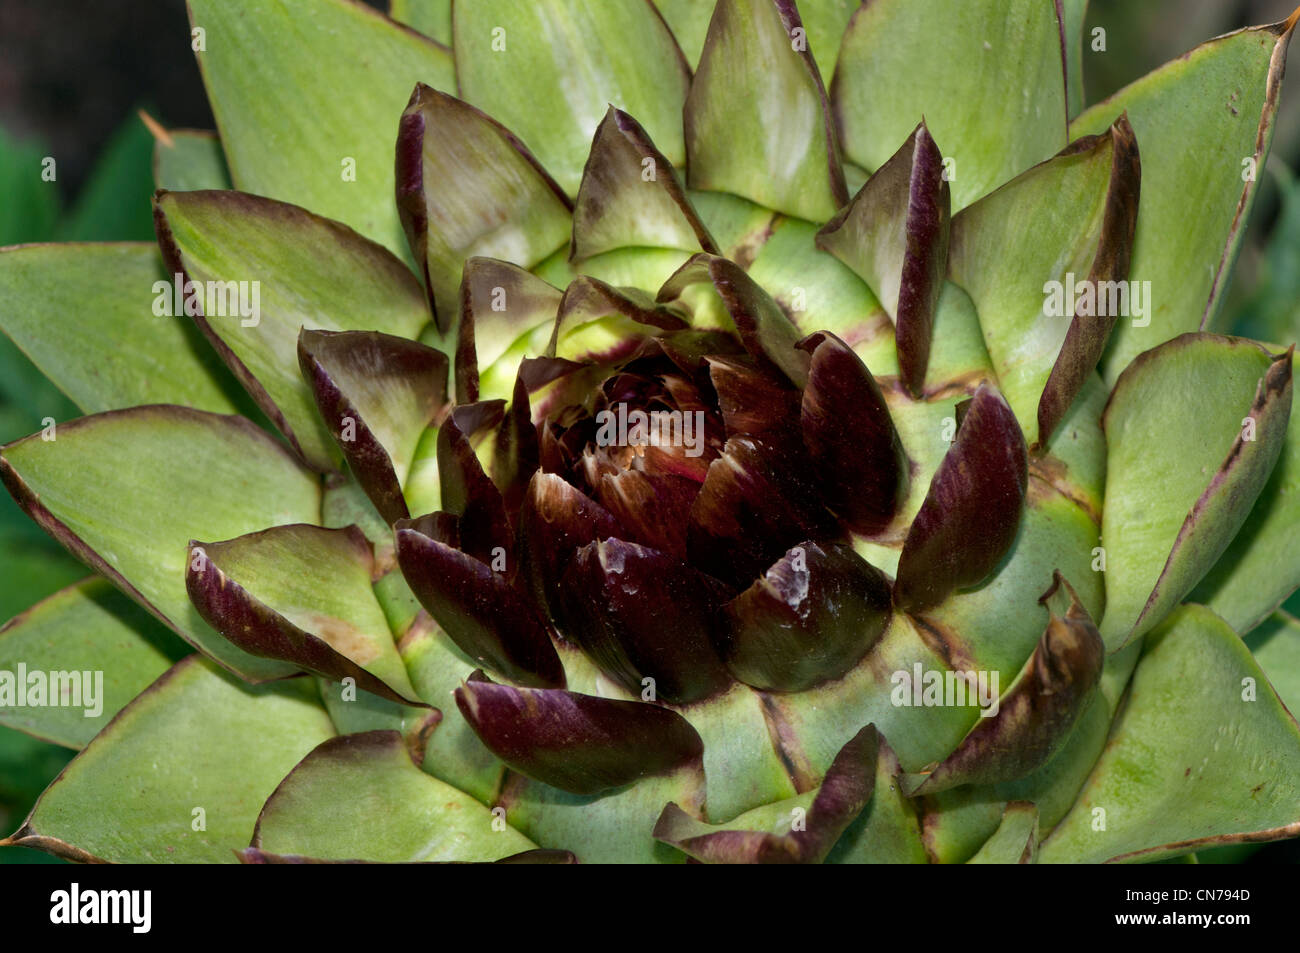 globe artichoke, Cynara cardunculus,  is a perennial edible thistle Stock Photo